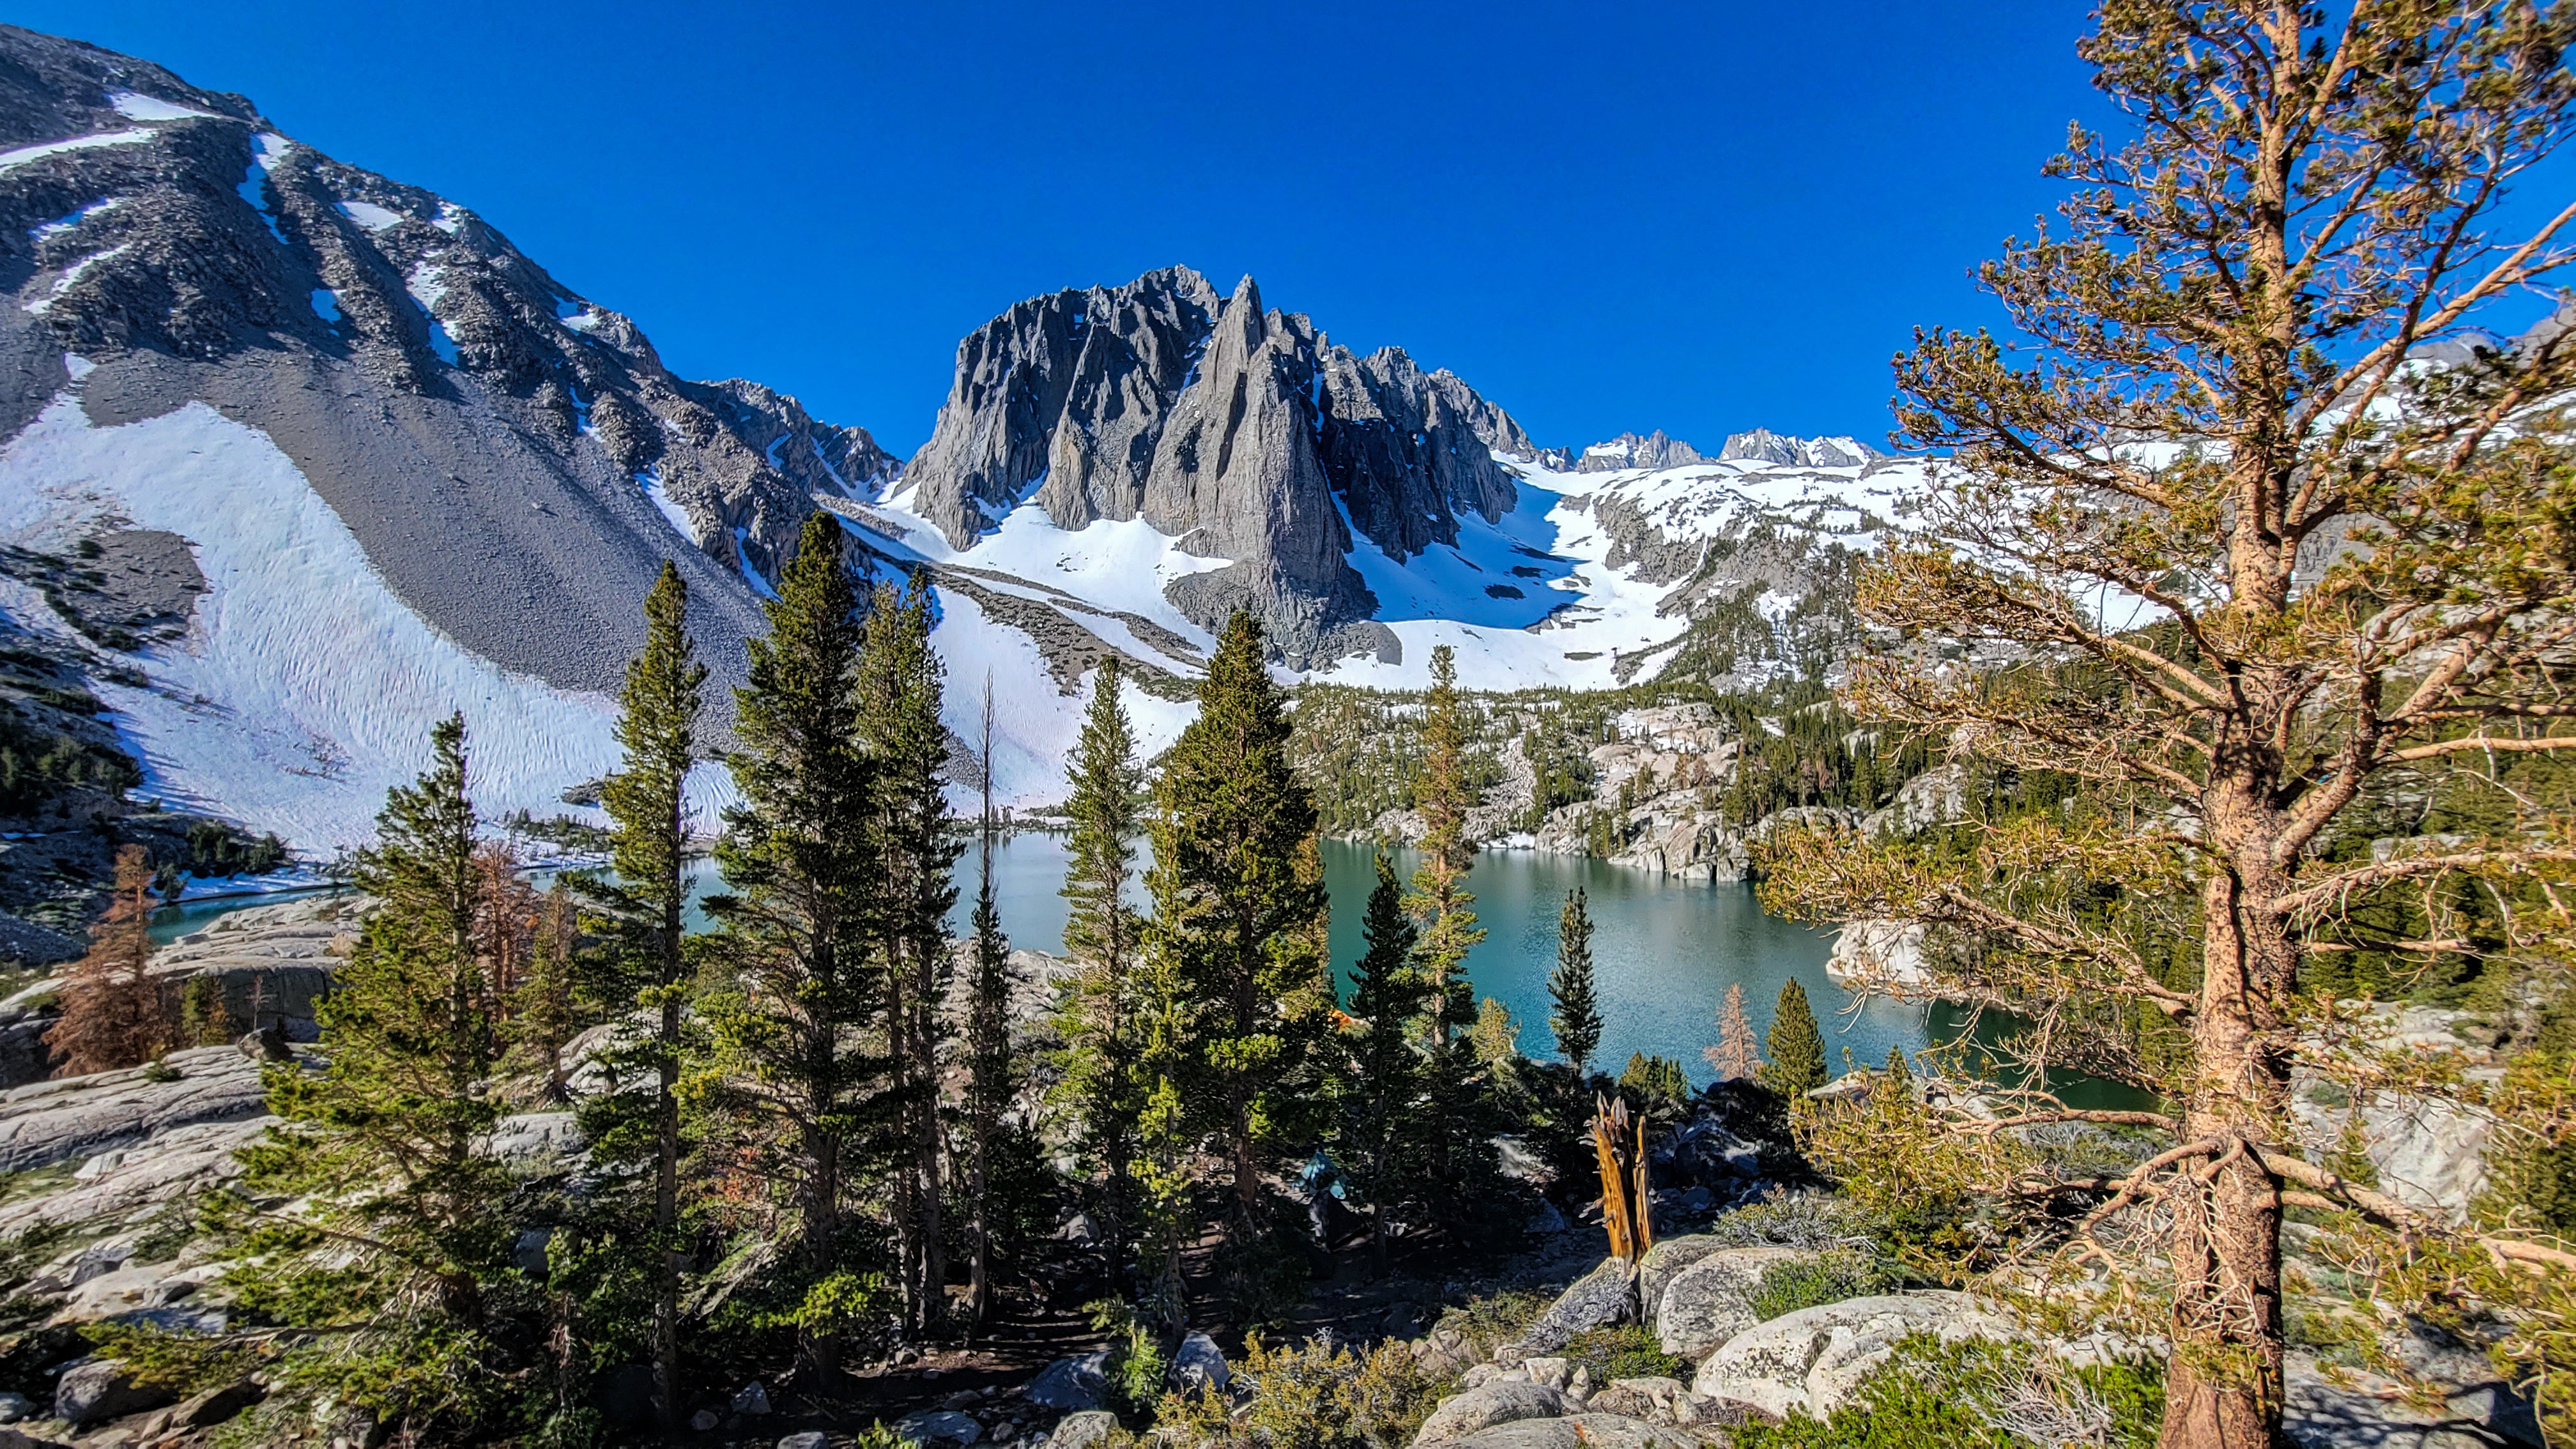 A Weekend Backcountry Adventure: Exploring Big Pine Lakes by Jason Huckeba